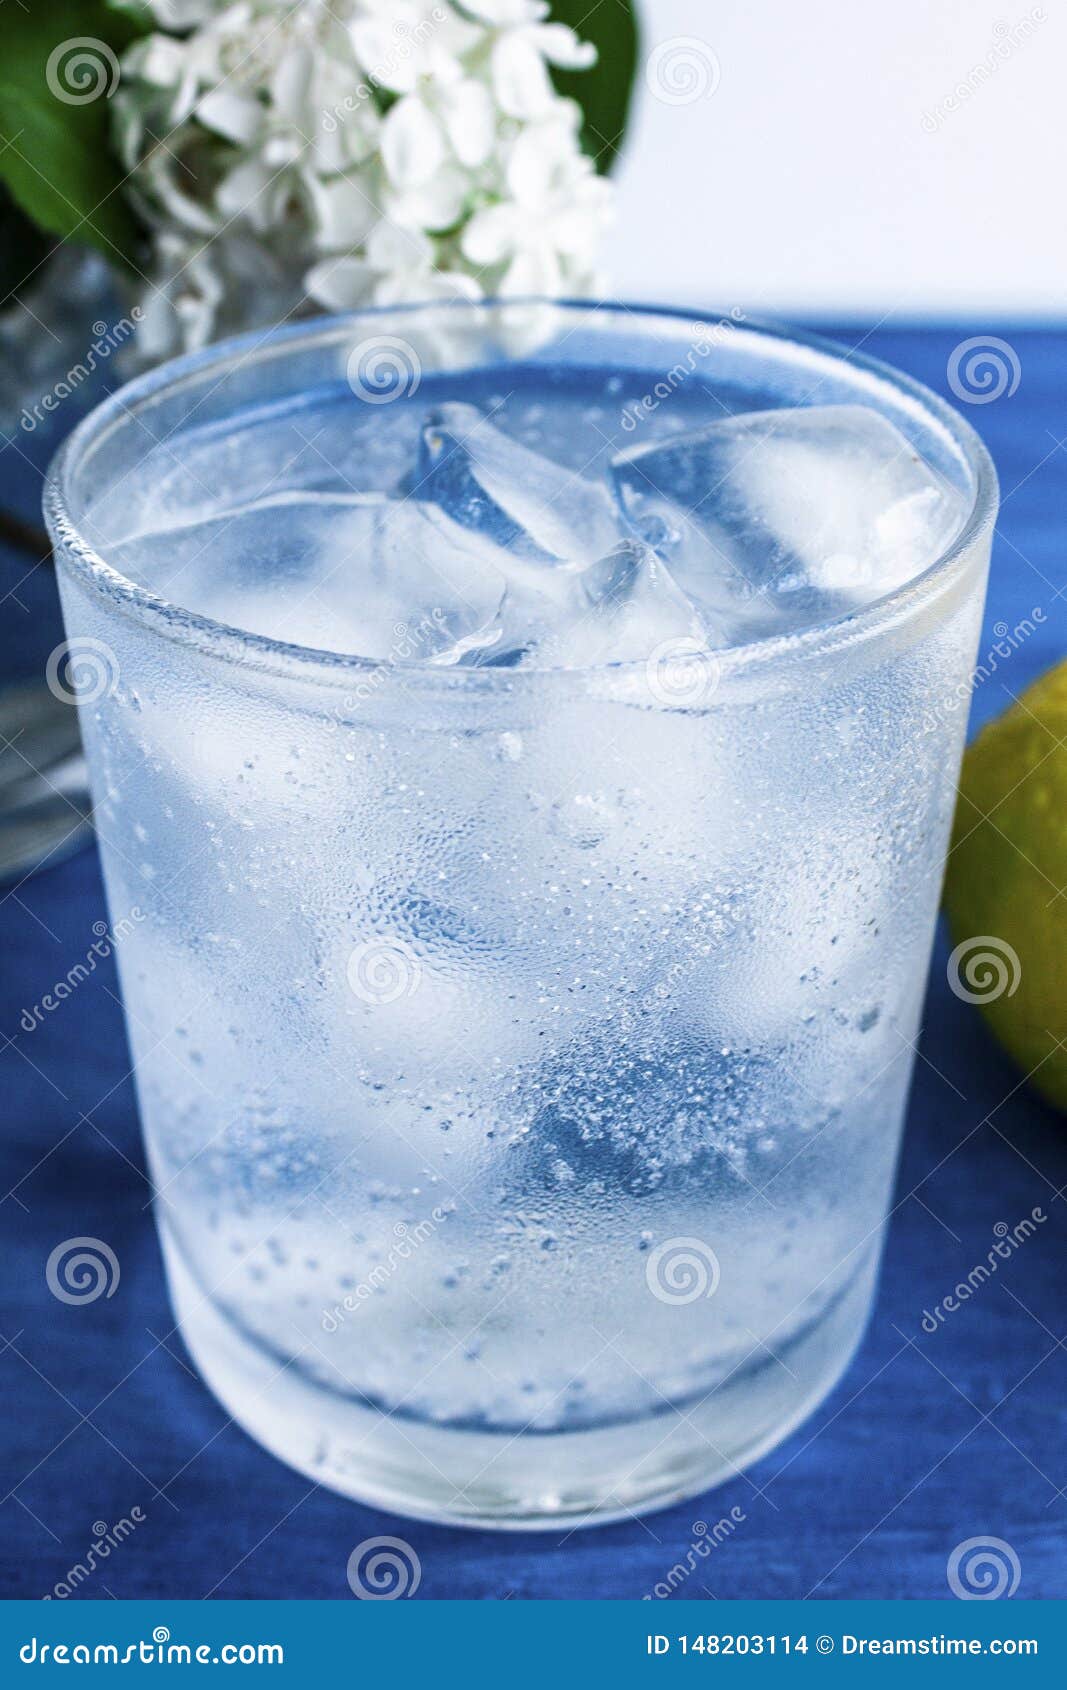 https://thumbs.dreamstime.com/z/glass-cold-water-ice-lemon-blue-background-148203114.jpg